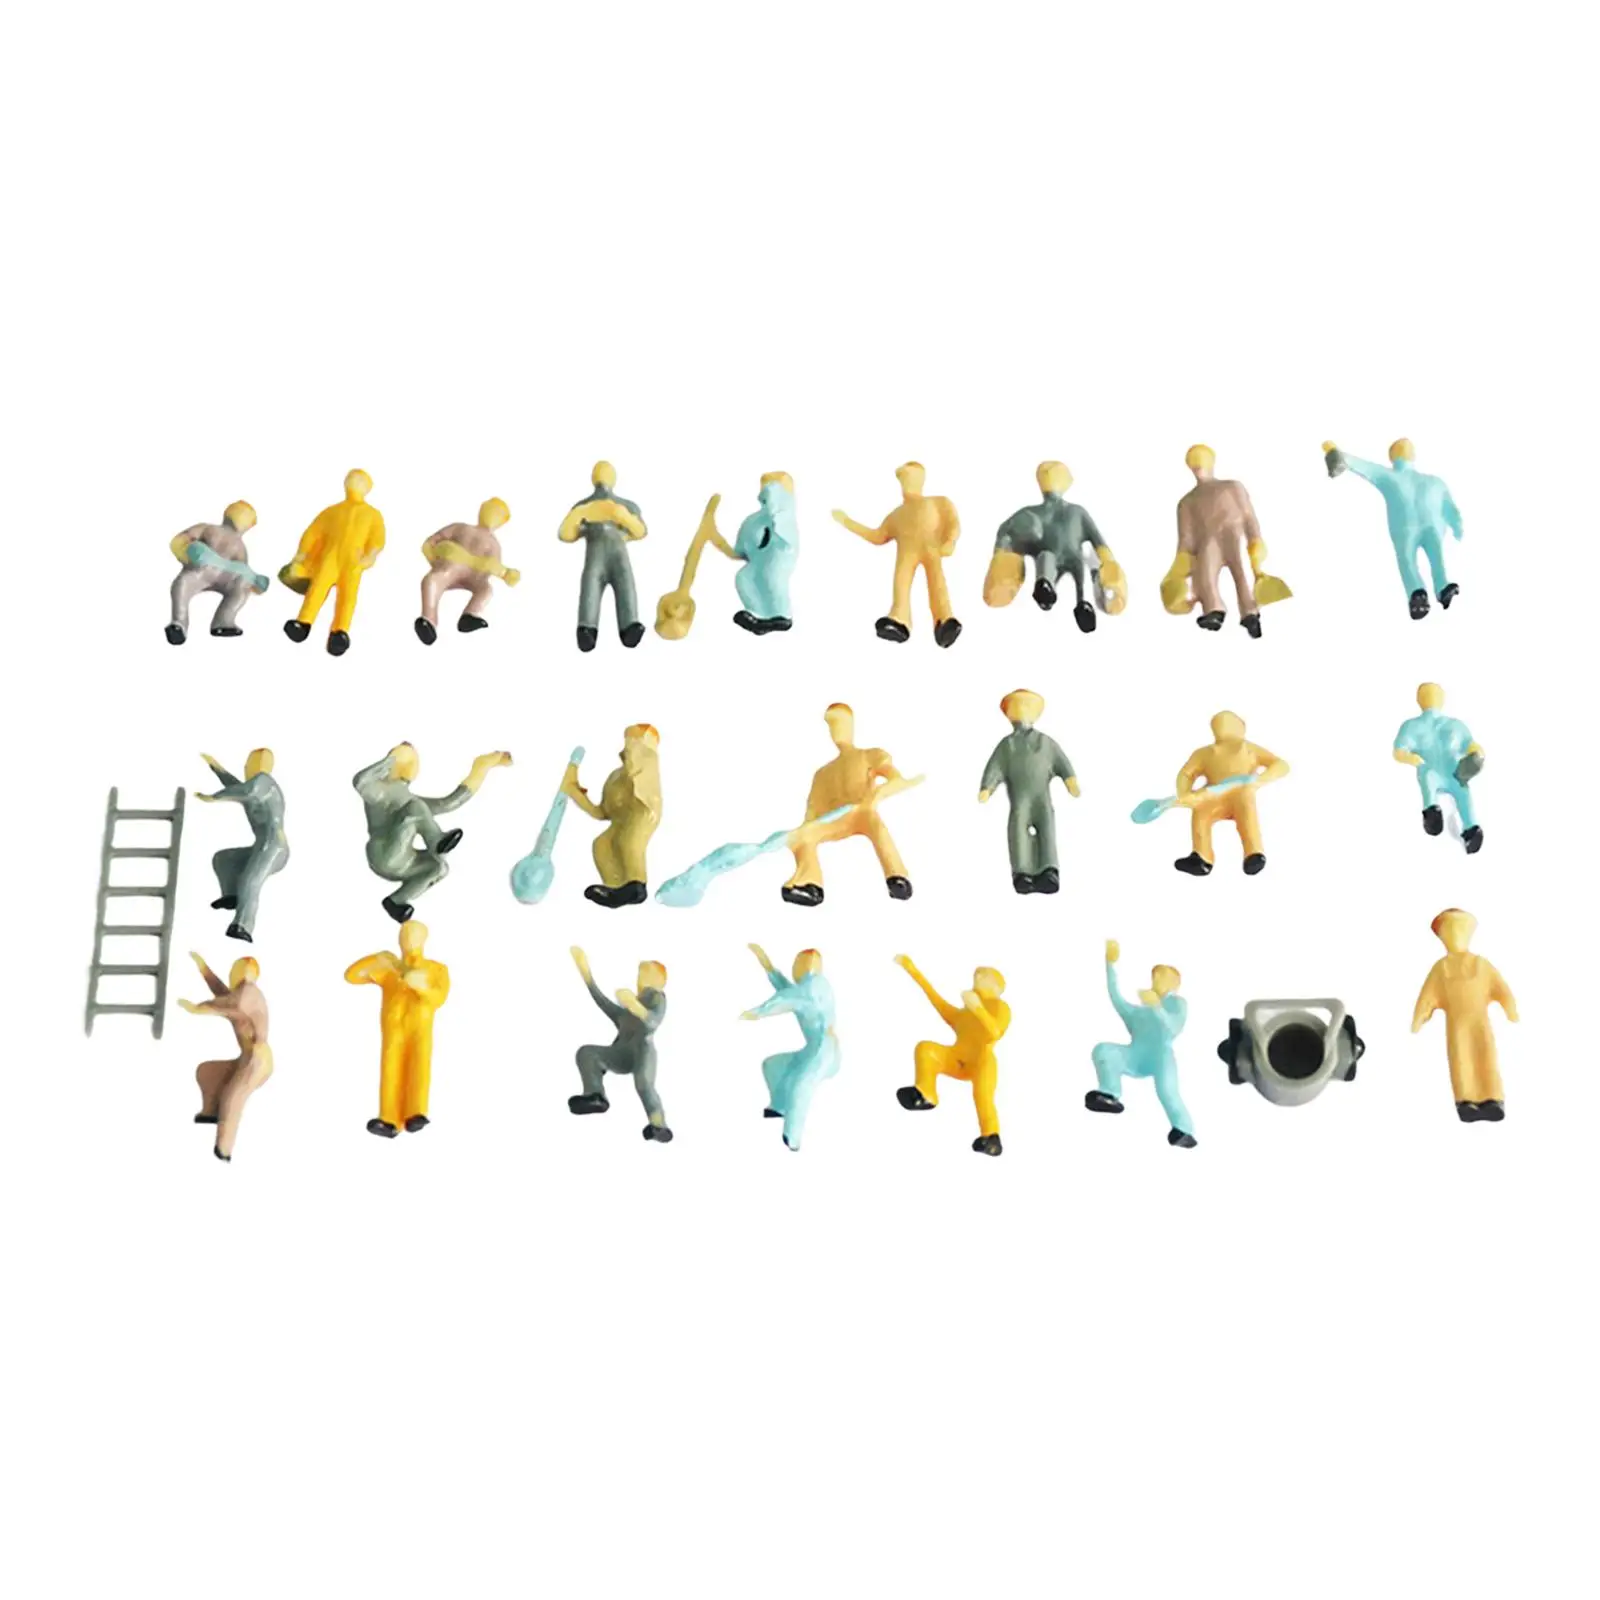 25x 1/87 Miniature Model Railroad Worker Figures with Tools Scenes Desktop Ornament Diorama HO Gauge Miniature Scenes Supplies